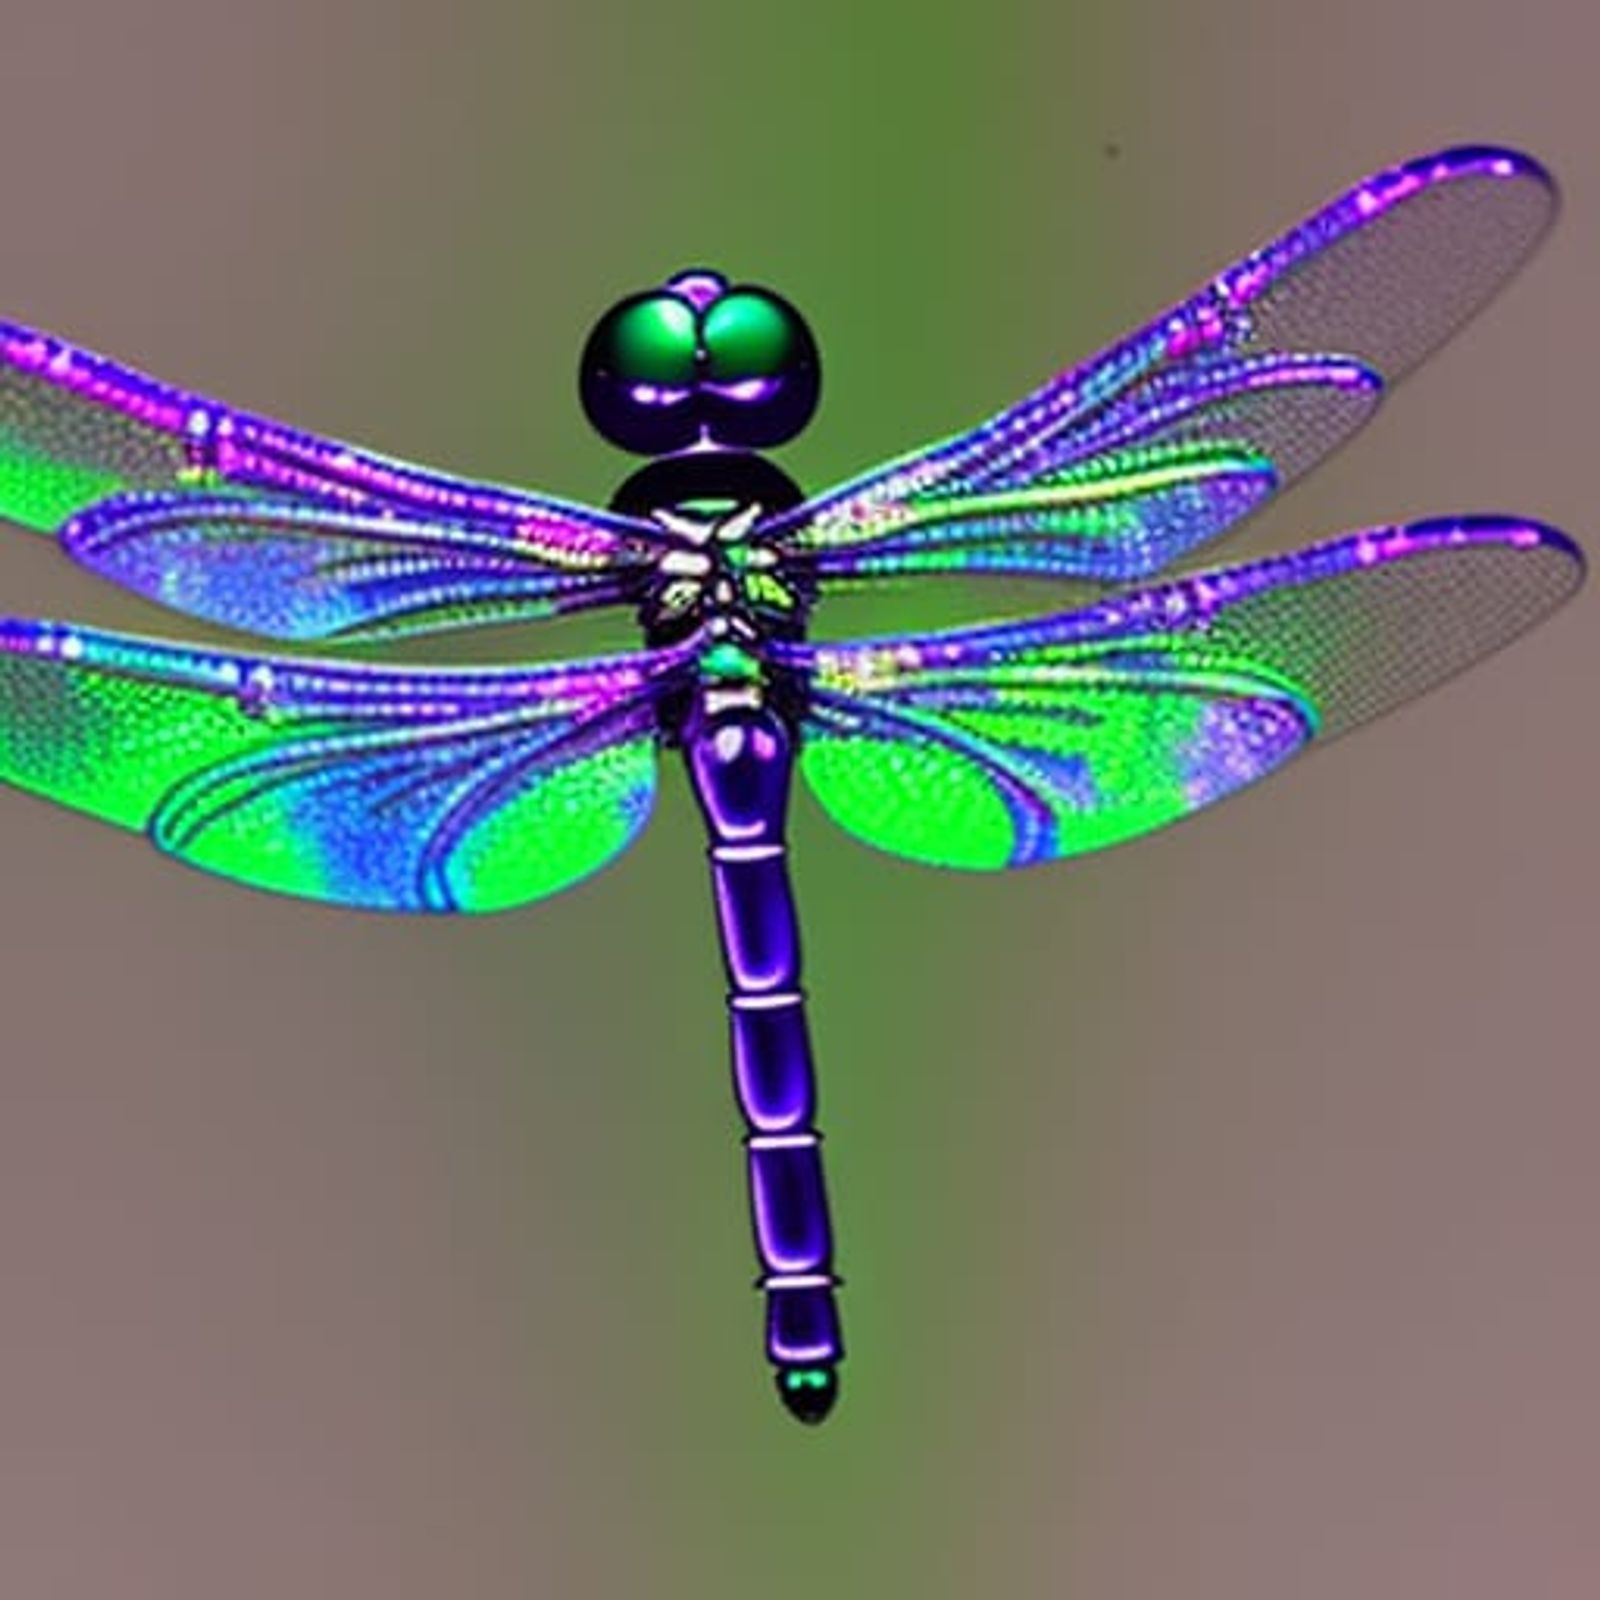 purple dragonfly